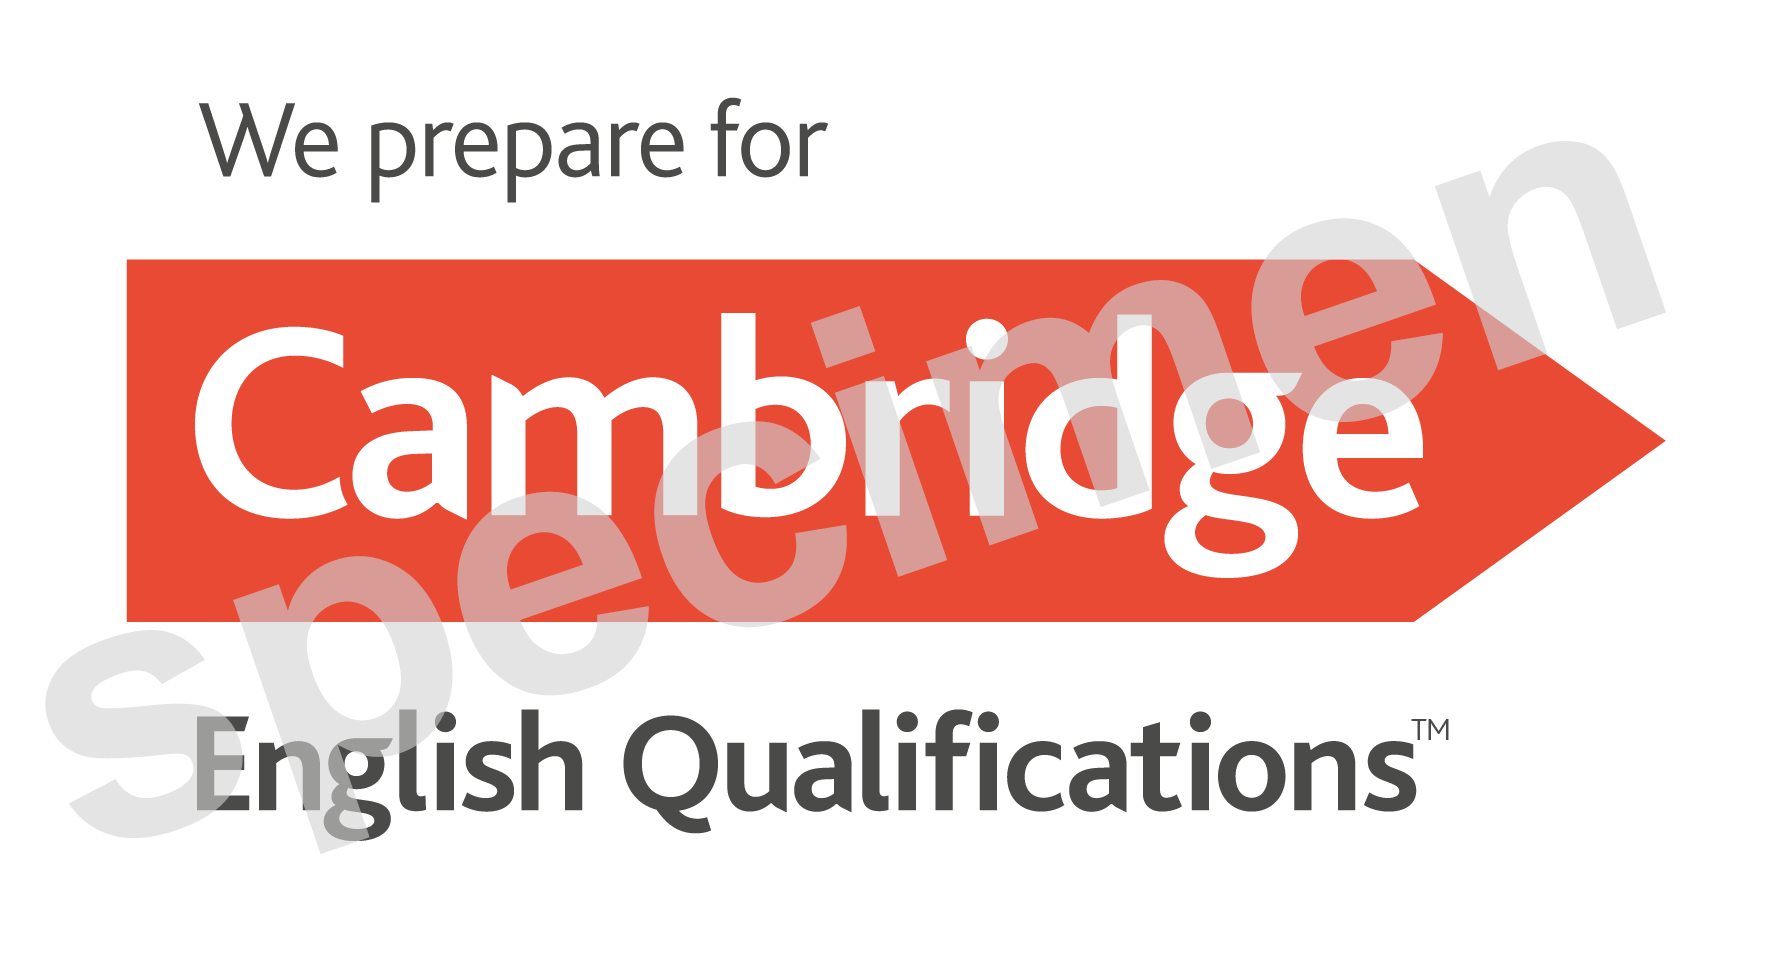 Exam Logo - Exam Preparation Logos for Schools for Use. Cambridge